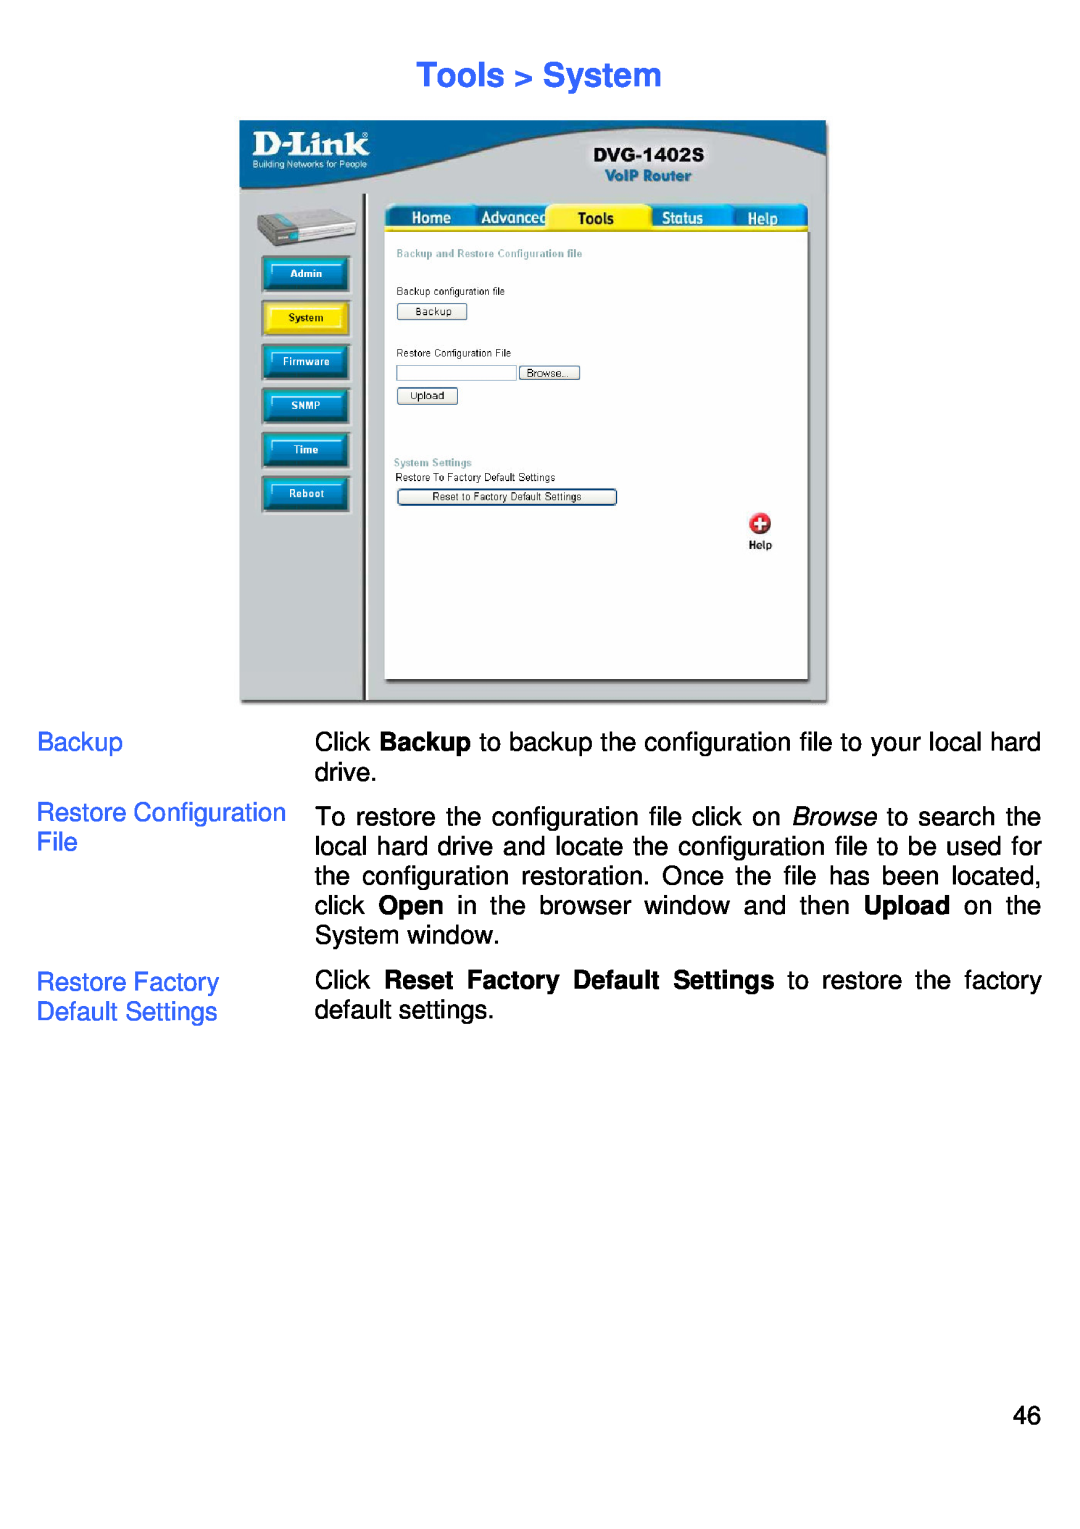 D-Link DVG-1402S manual Tools System, Backup Restore Configuration File Restore Factory Default Settings 